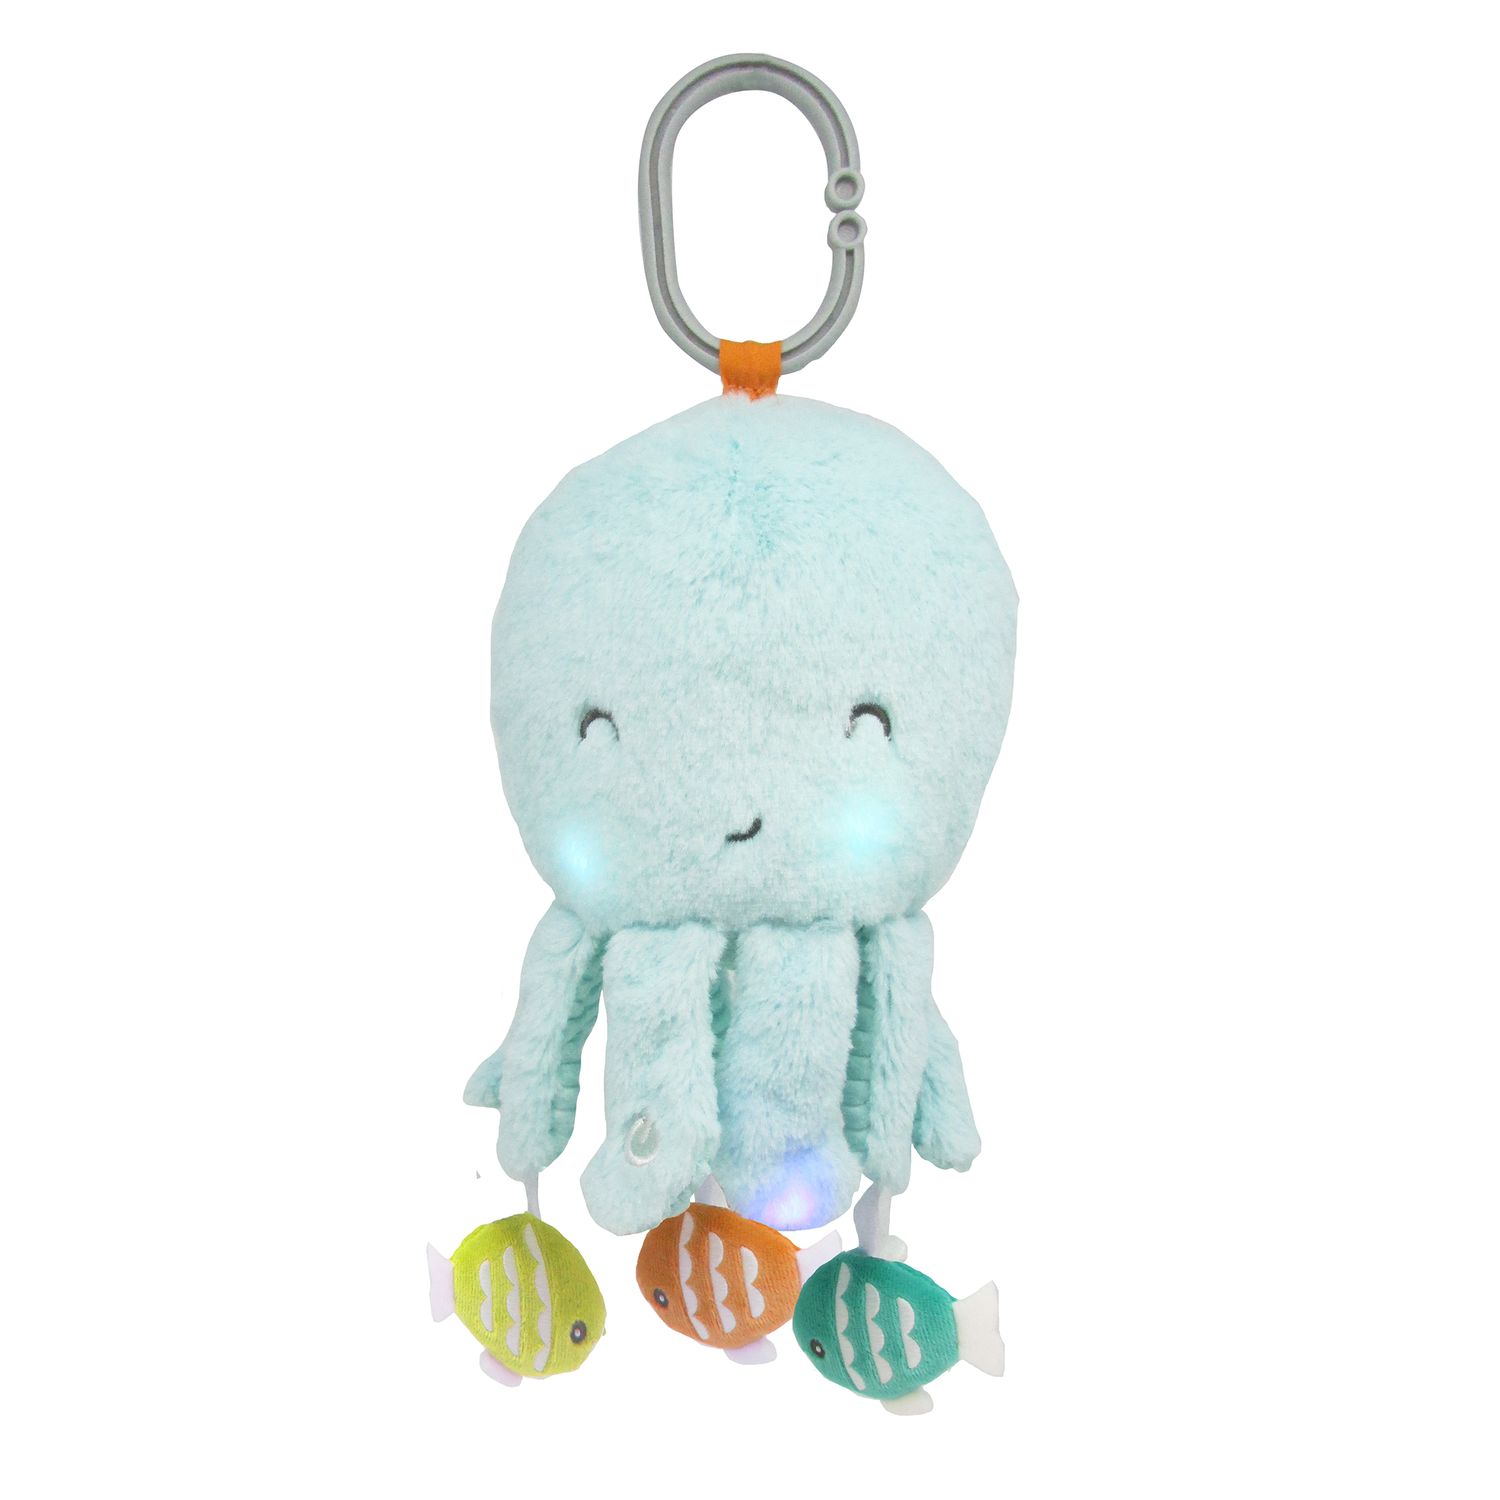 singing octopus toy